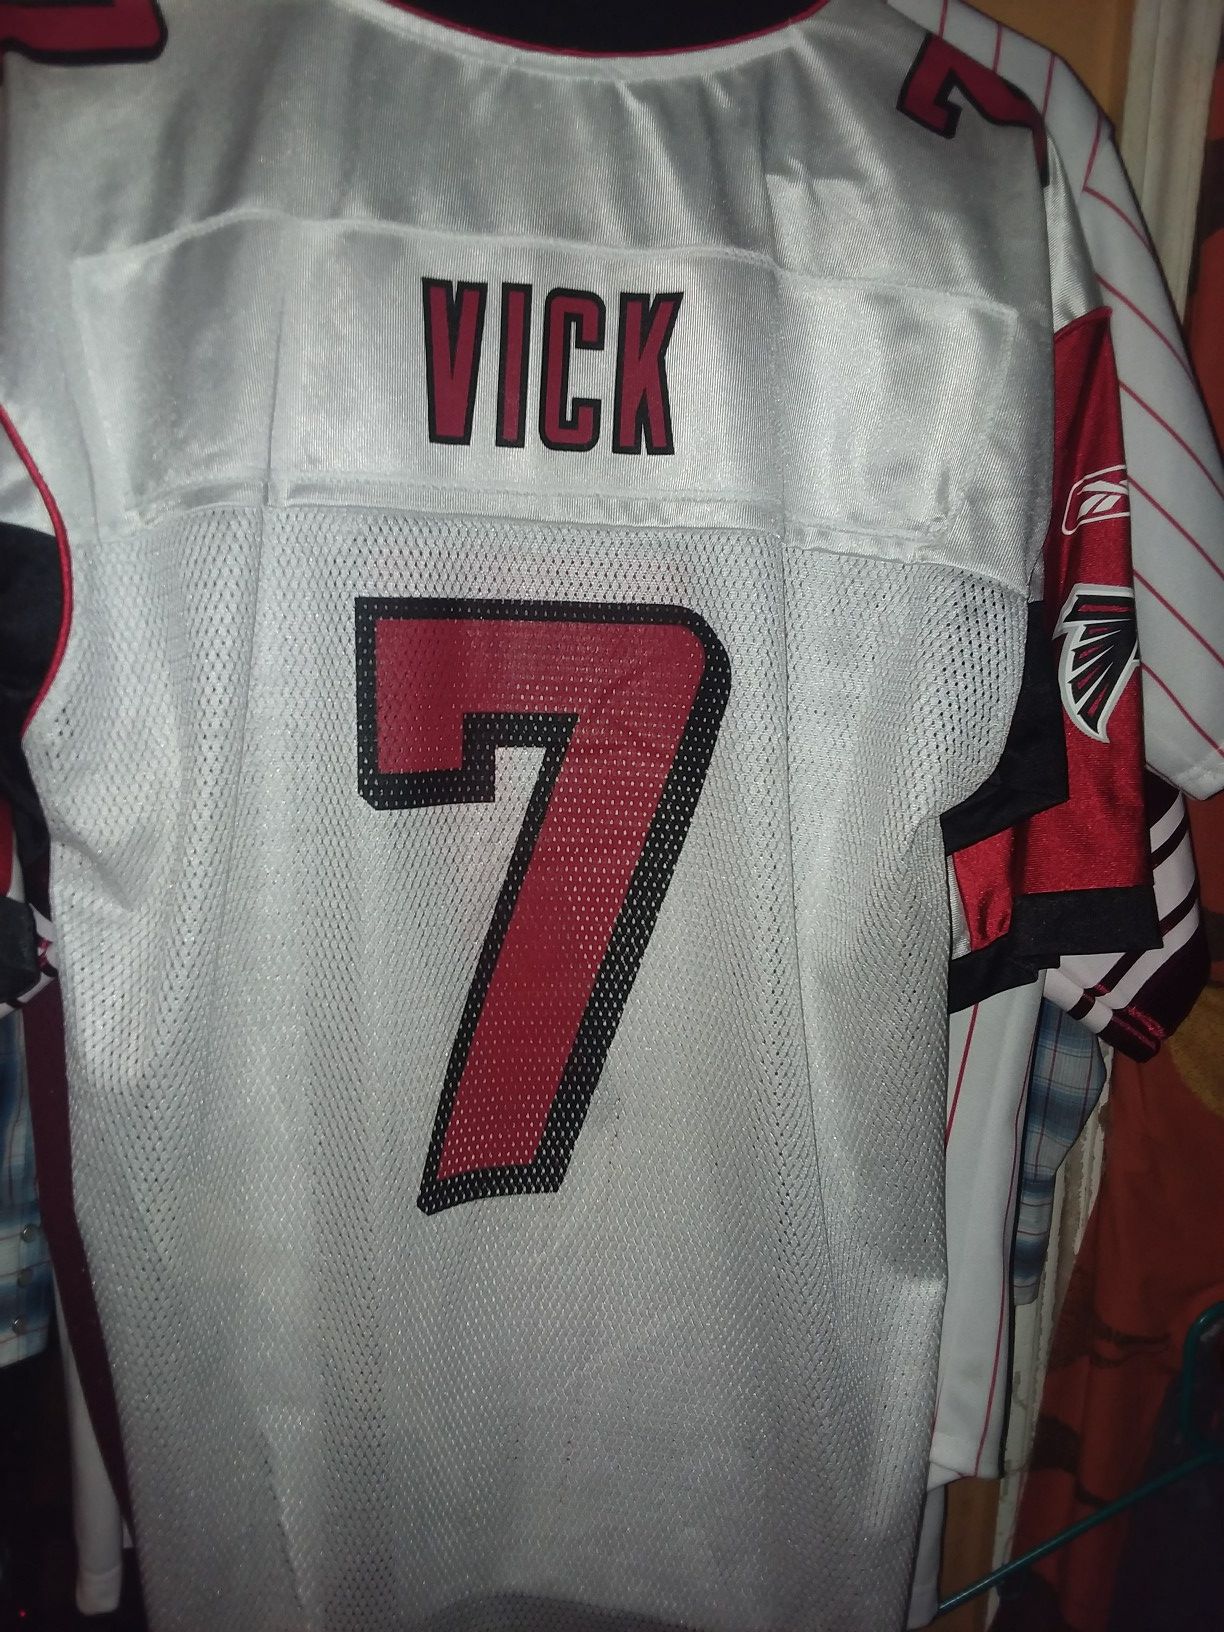 Michael Vick jersey